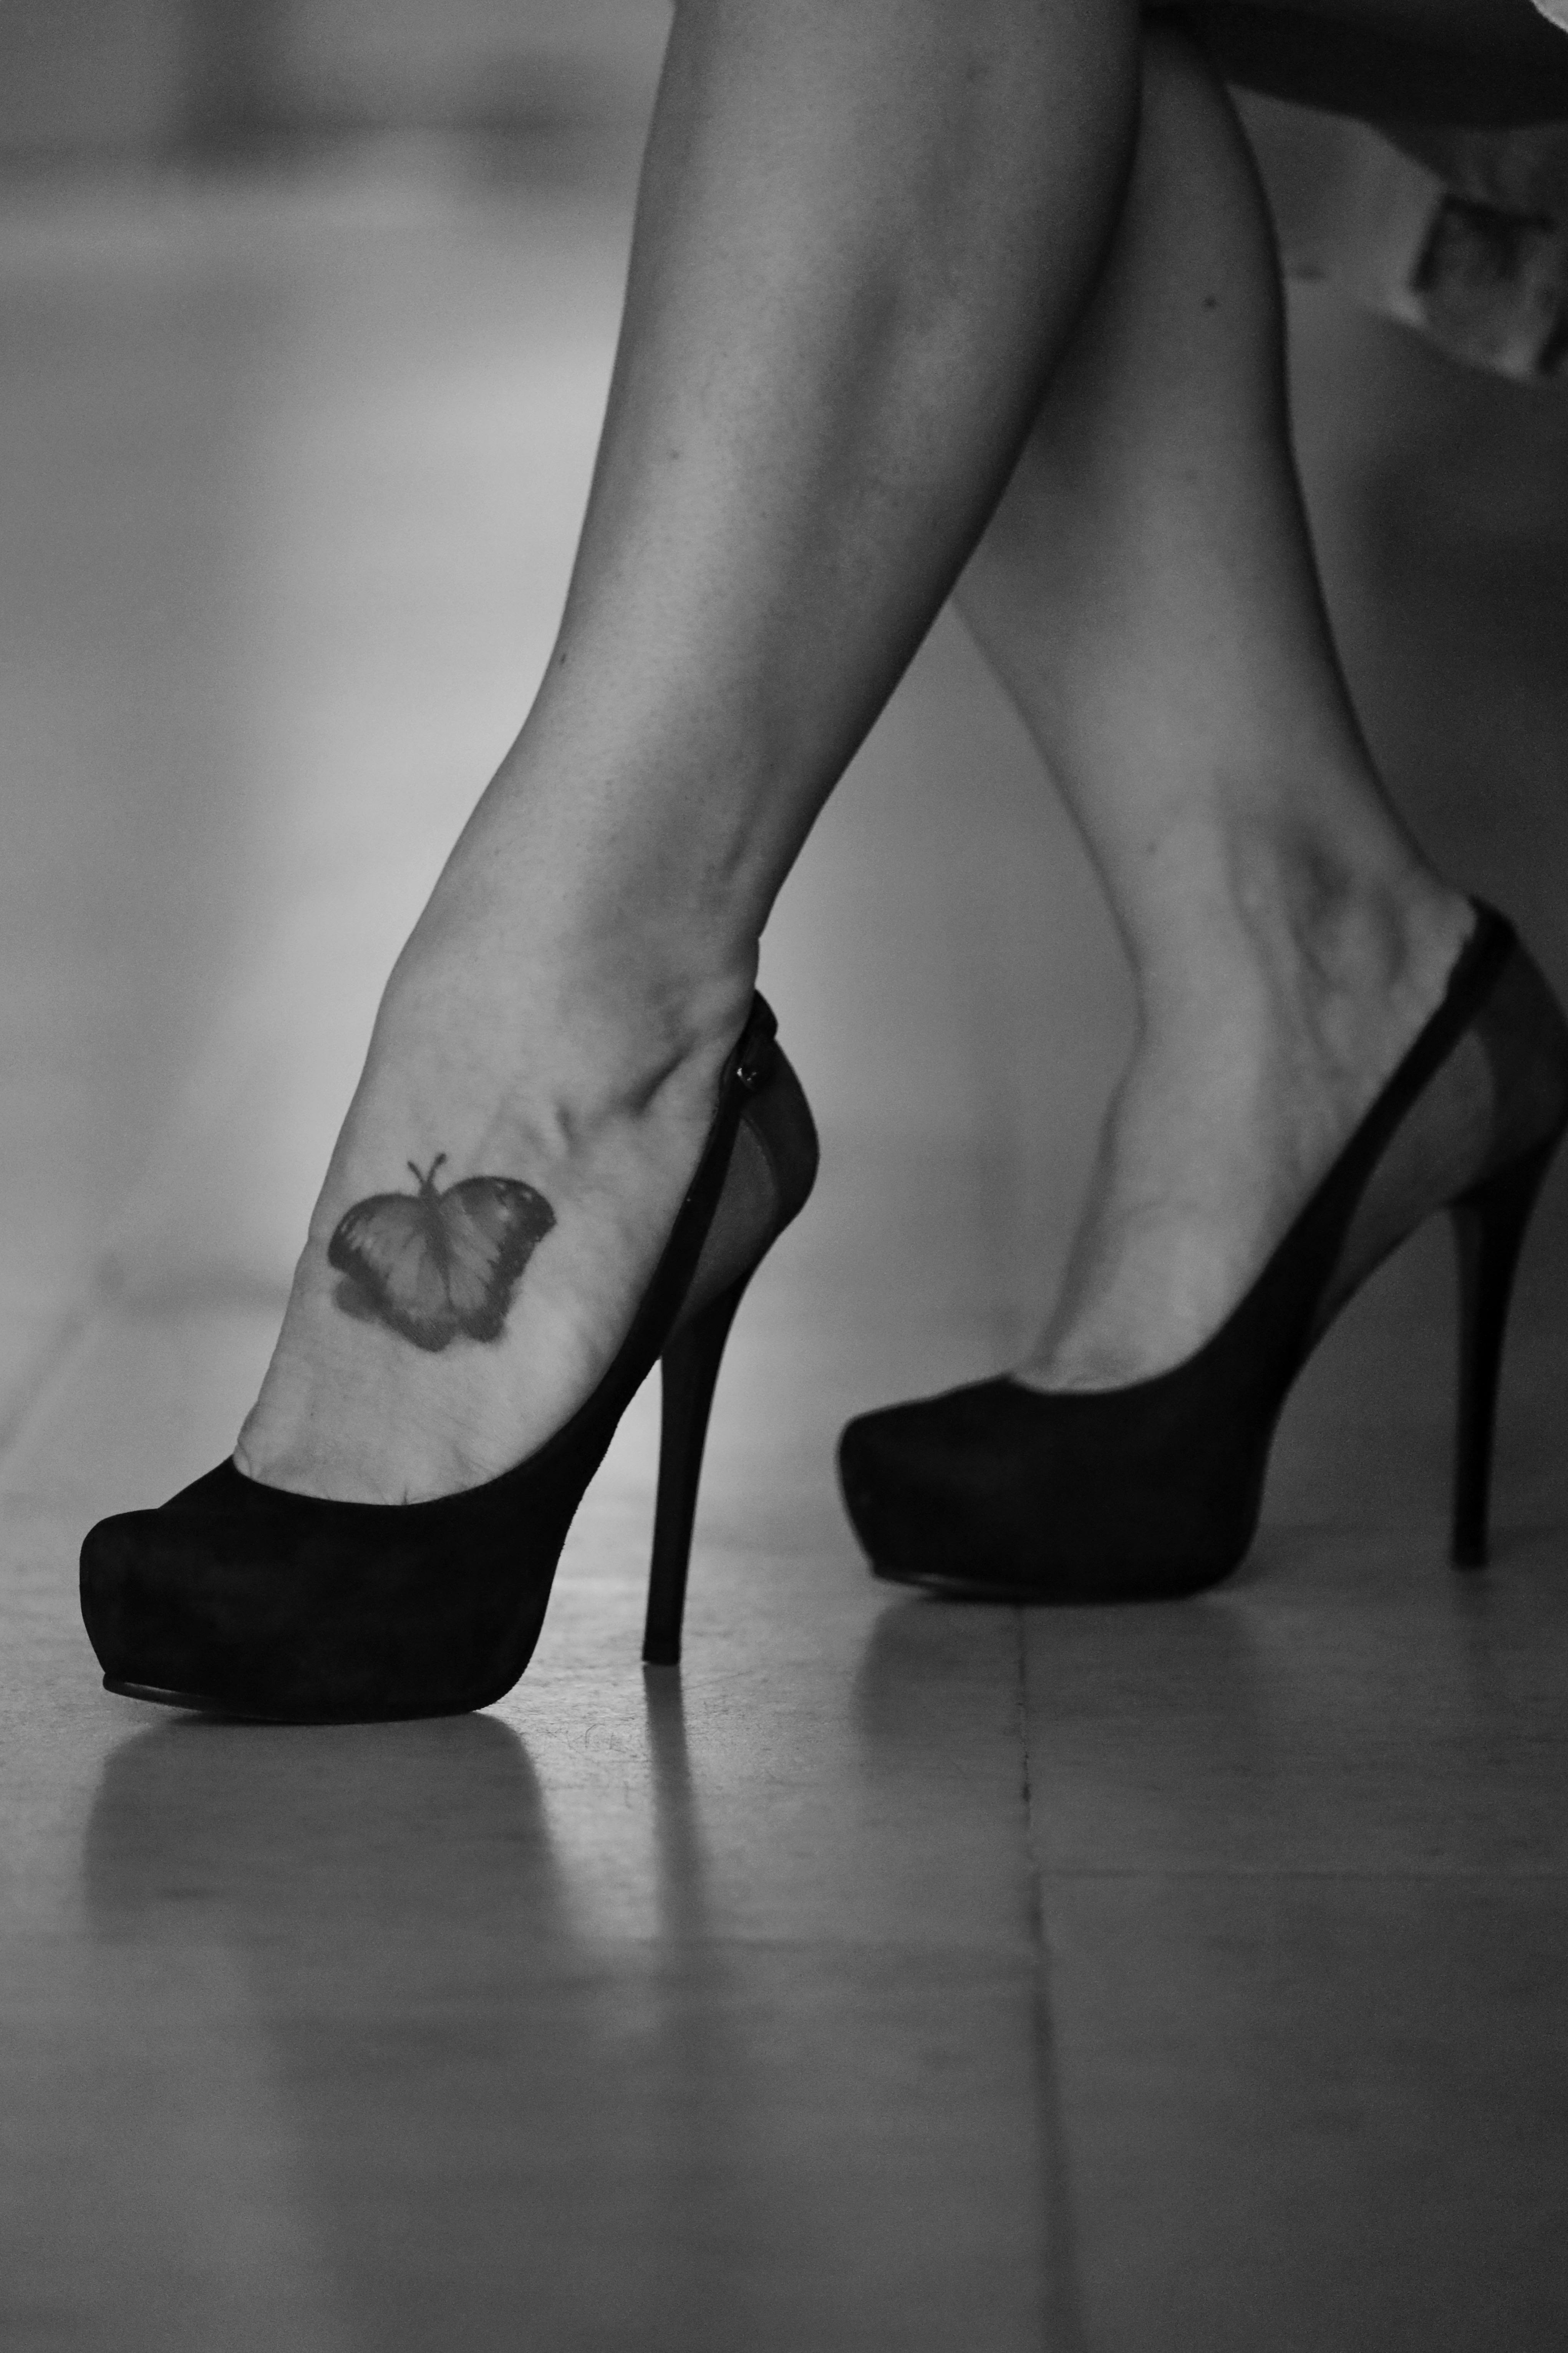 Black Heels of a Woman · Free Stock Photo